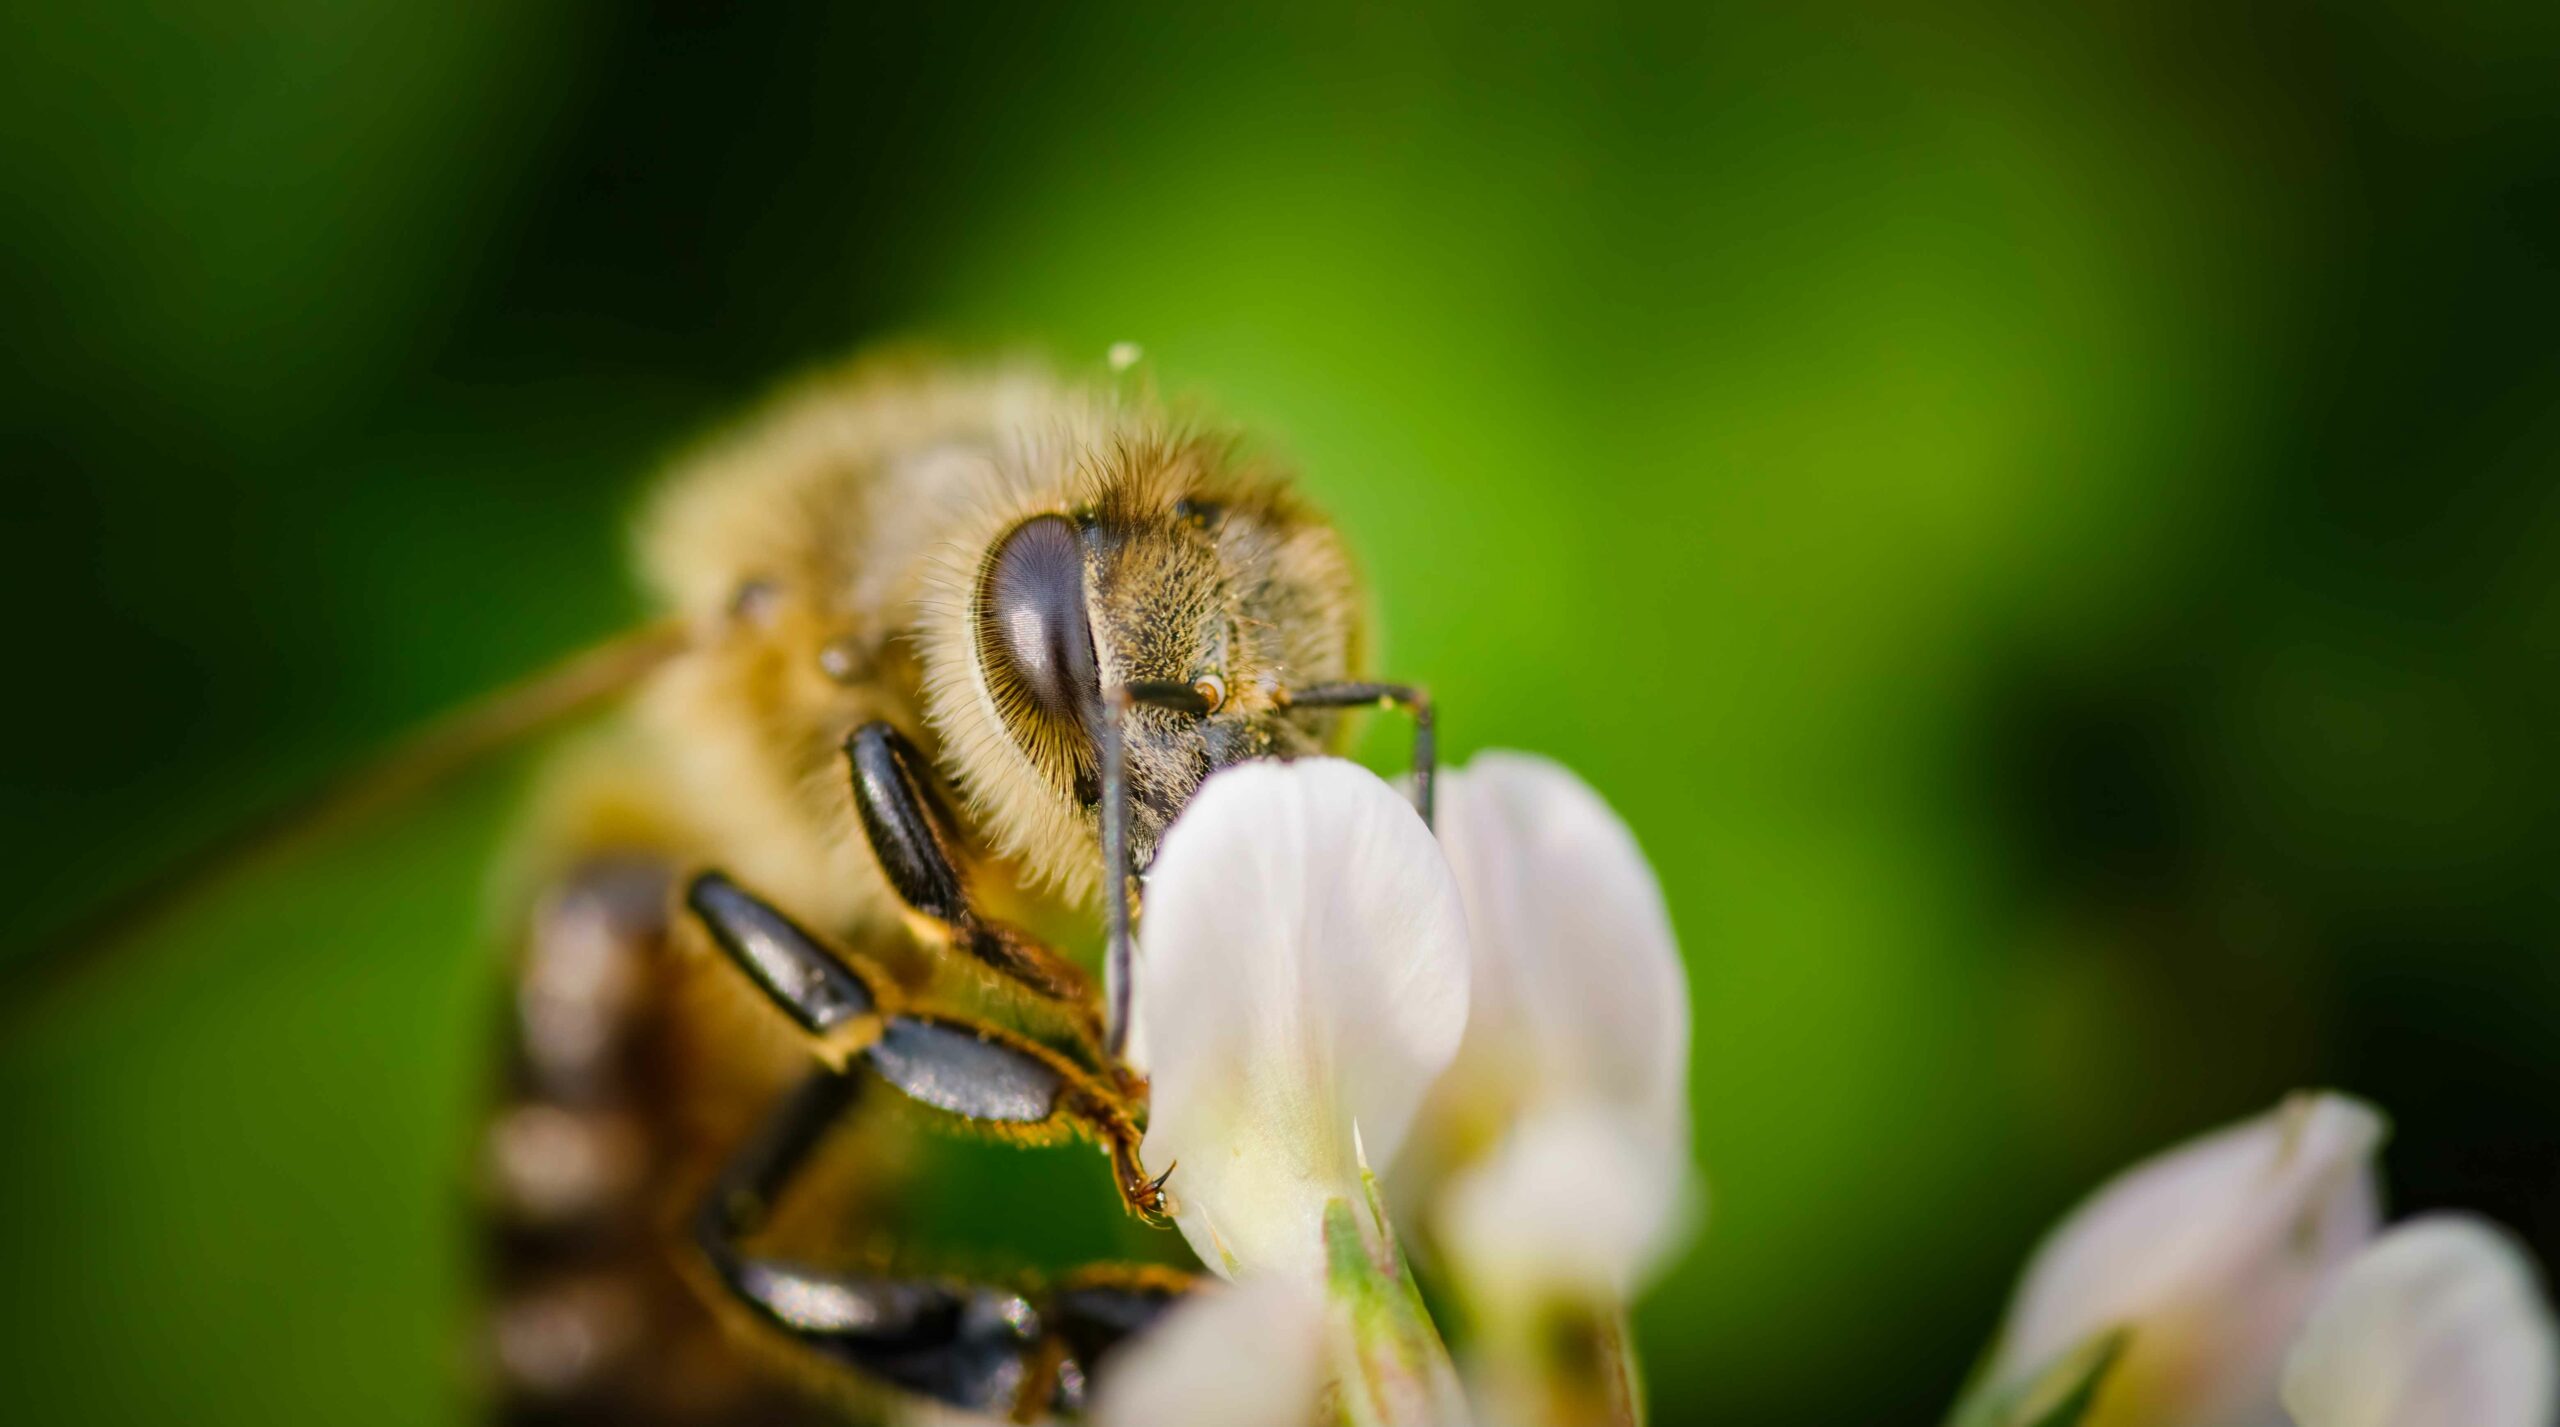 Imagen ilustrativa abeja recolectando néctar en una flor.